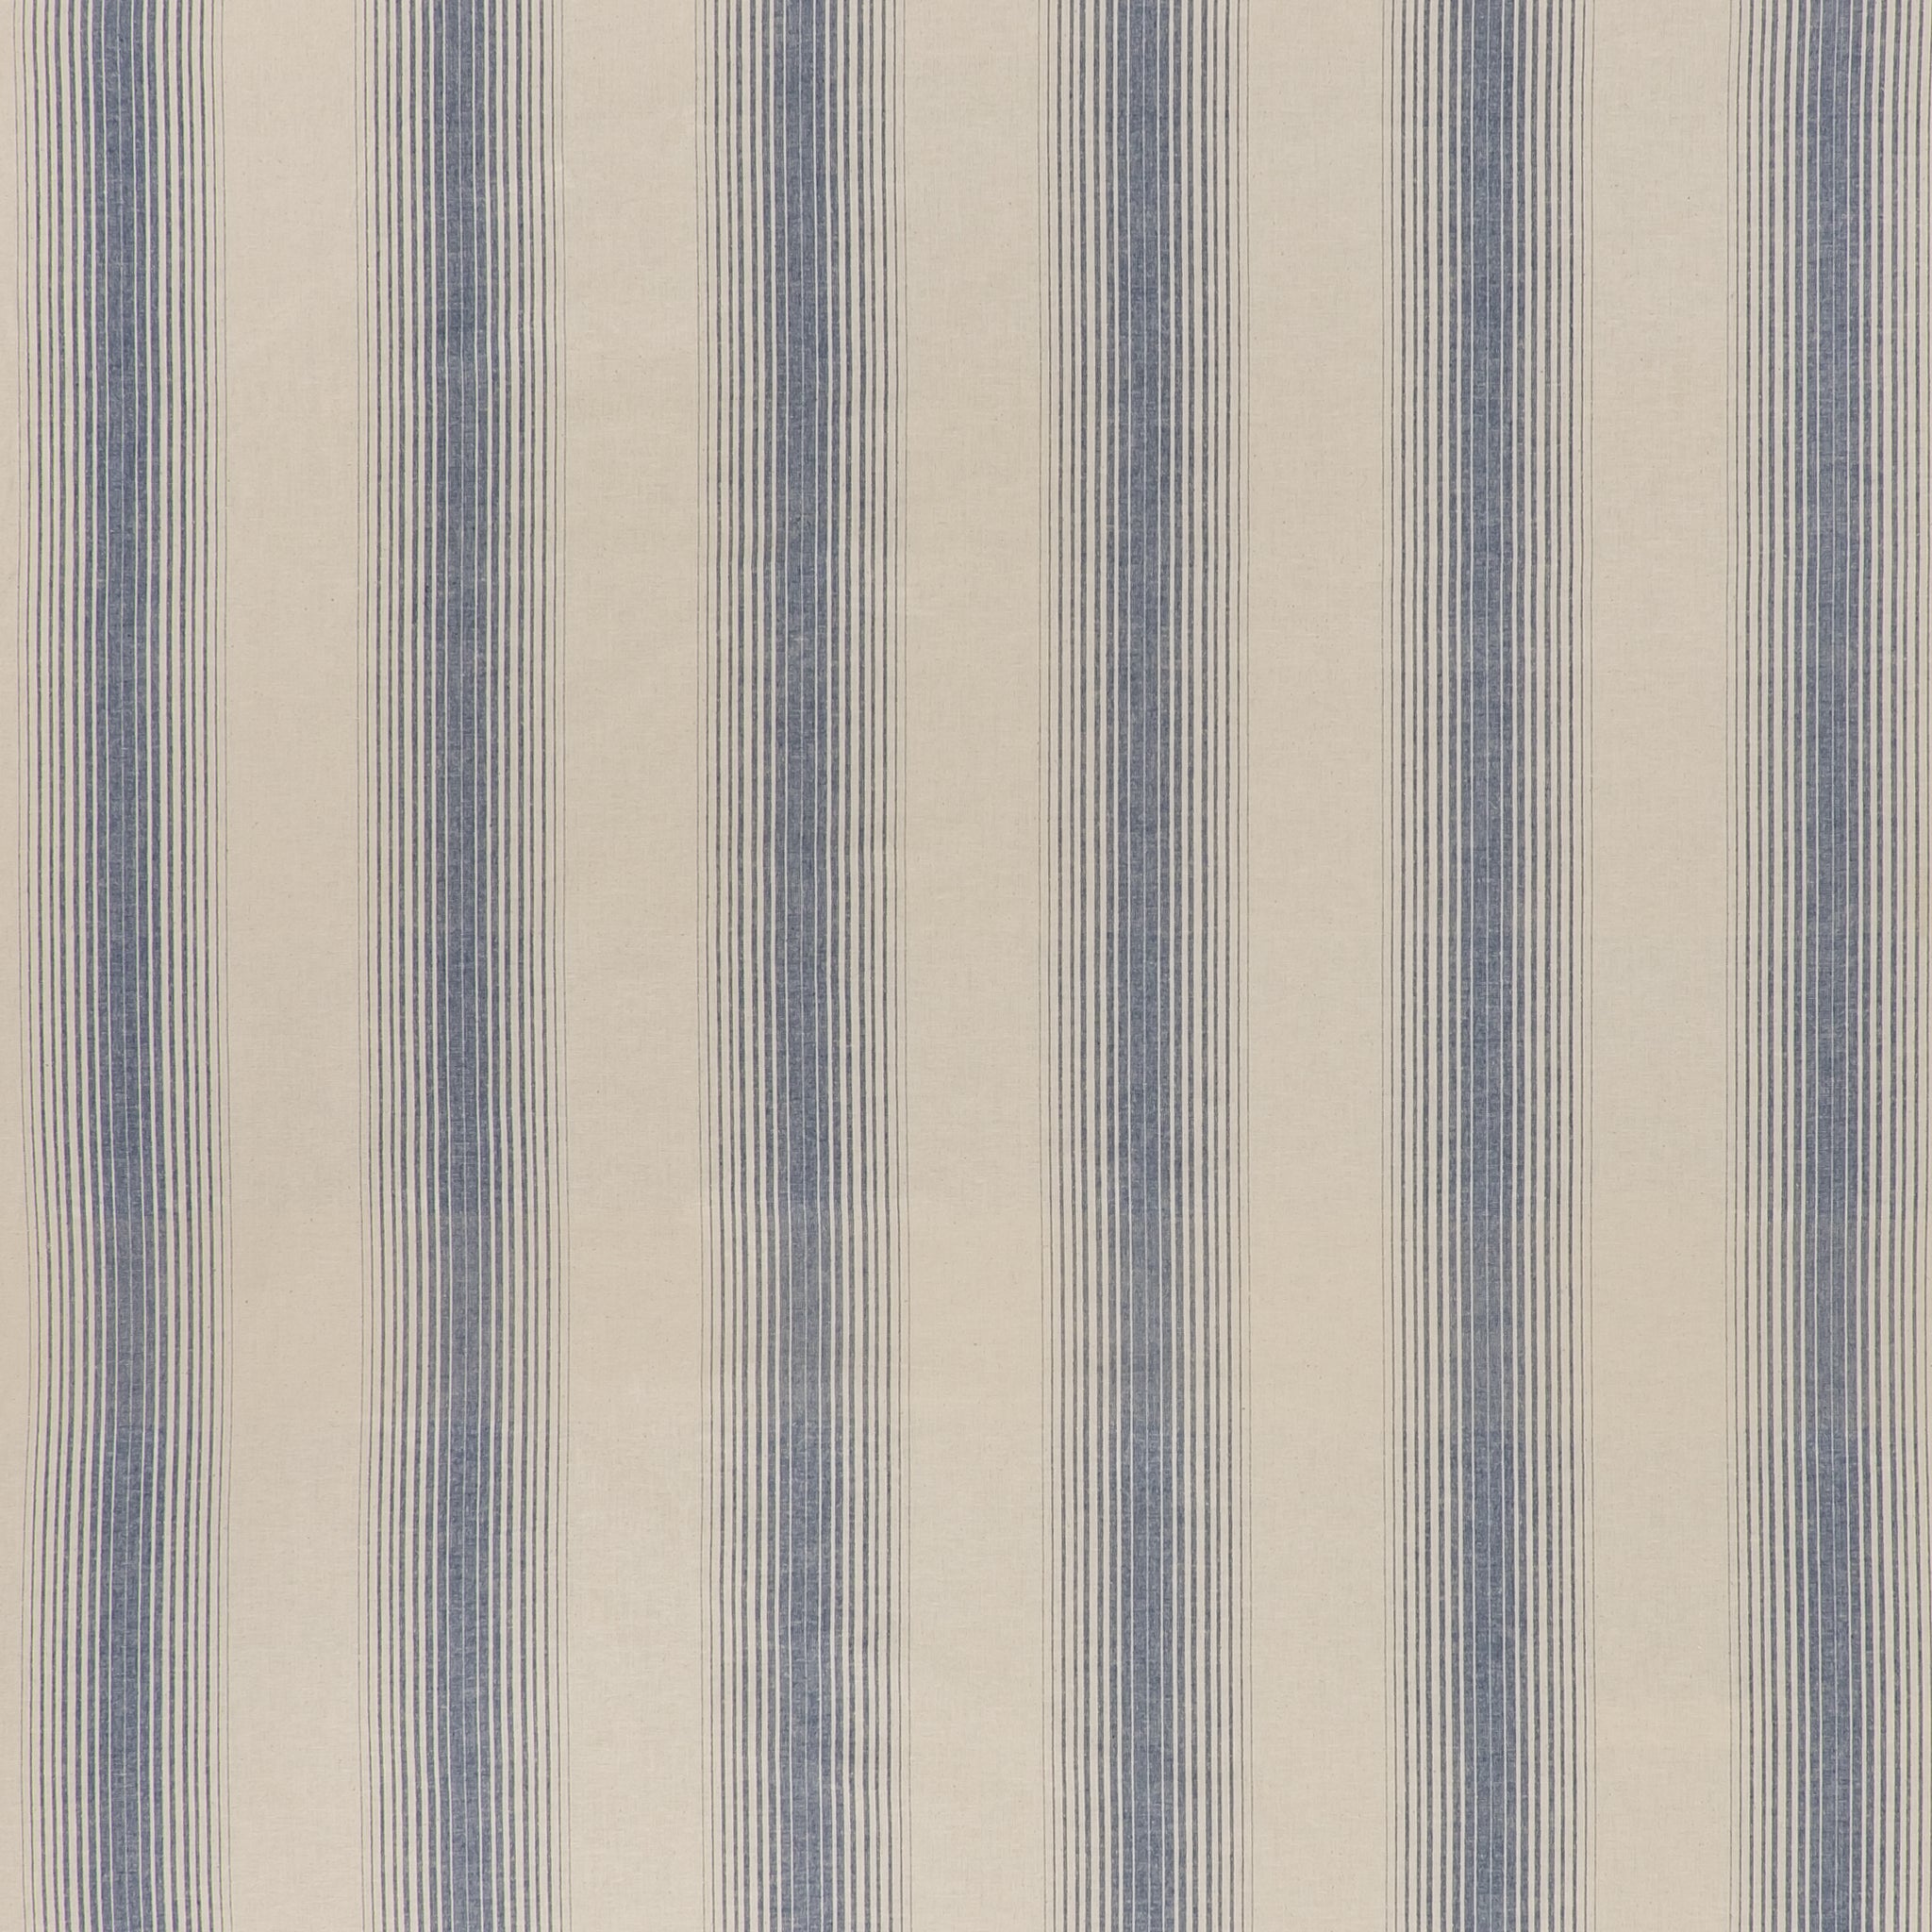 Homespun Stripe Fabric - Sea